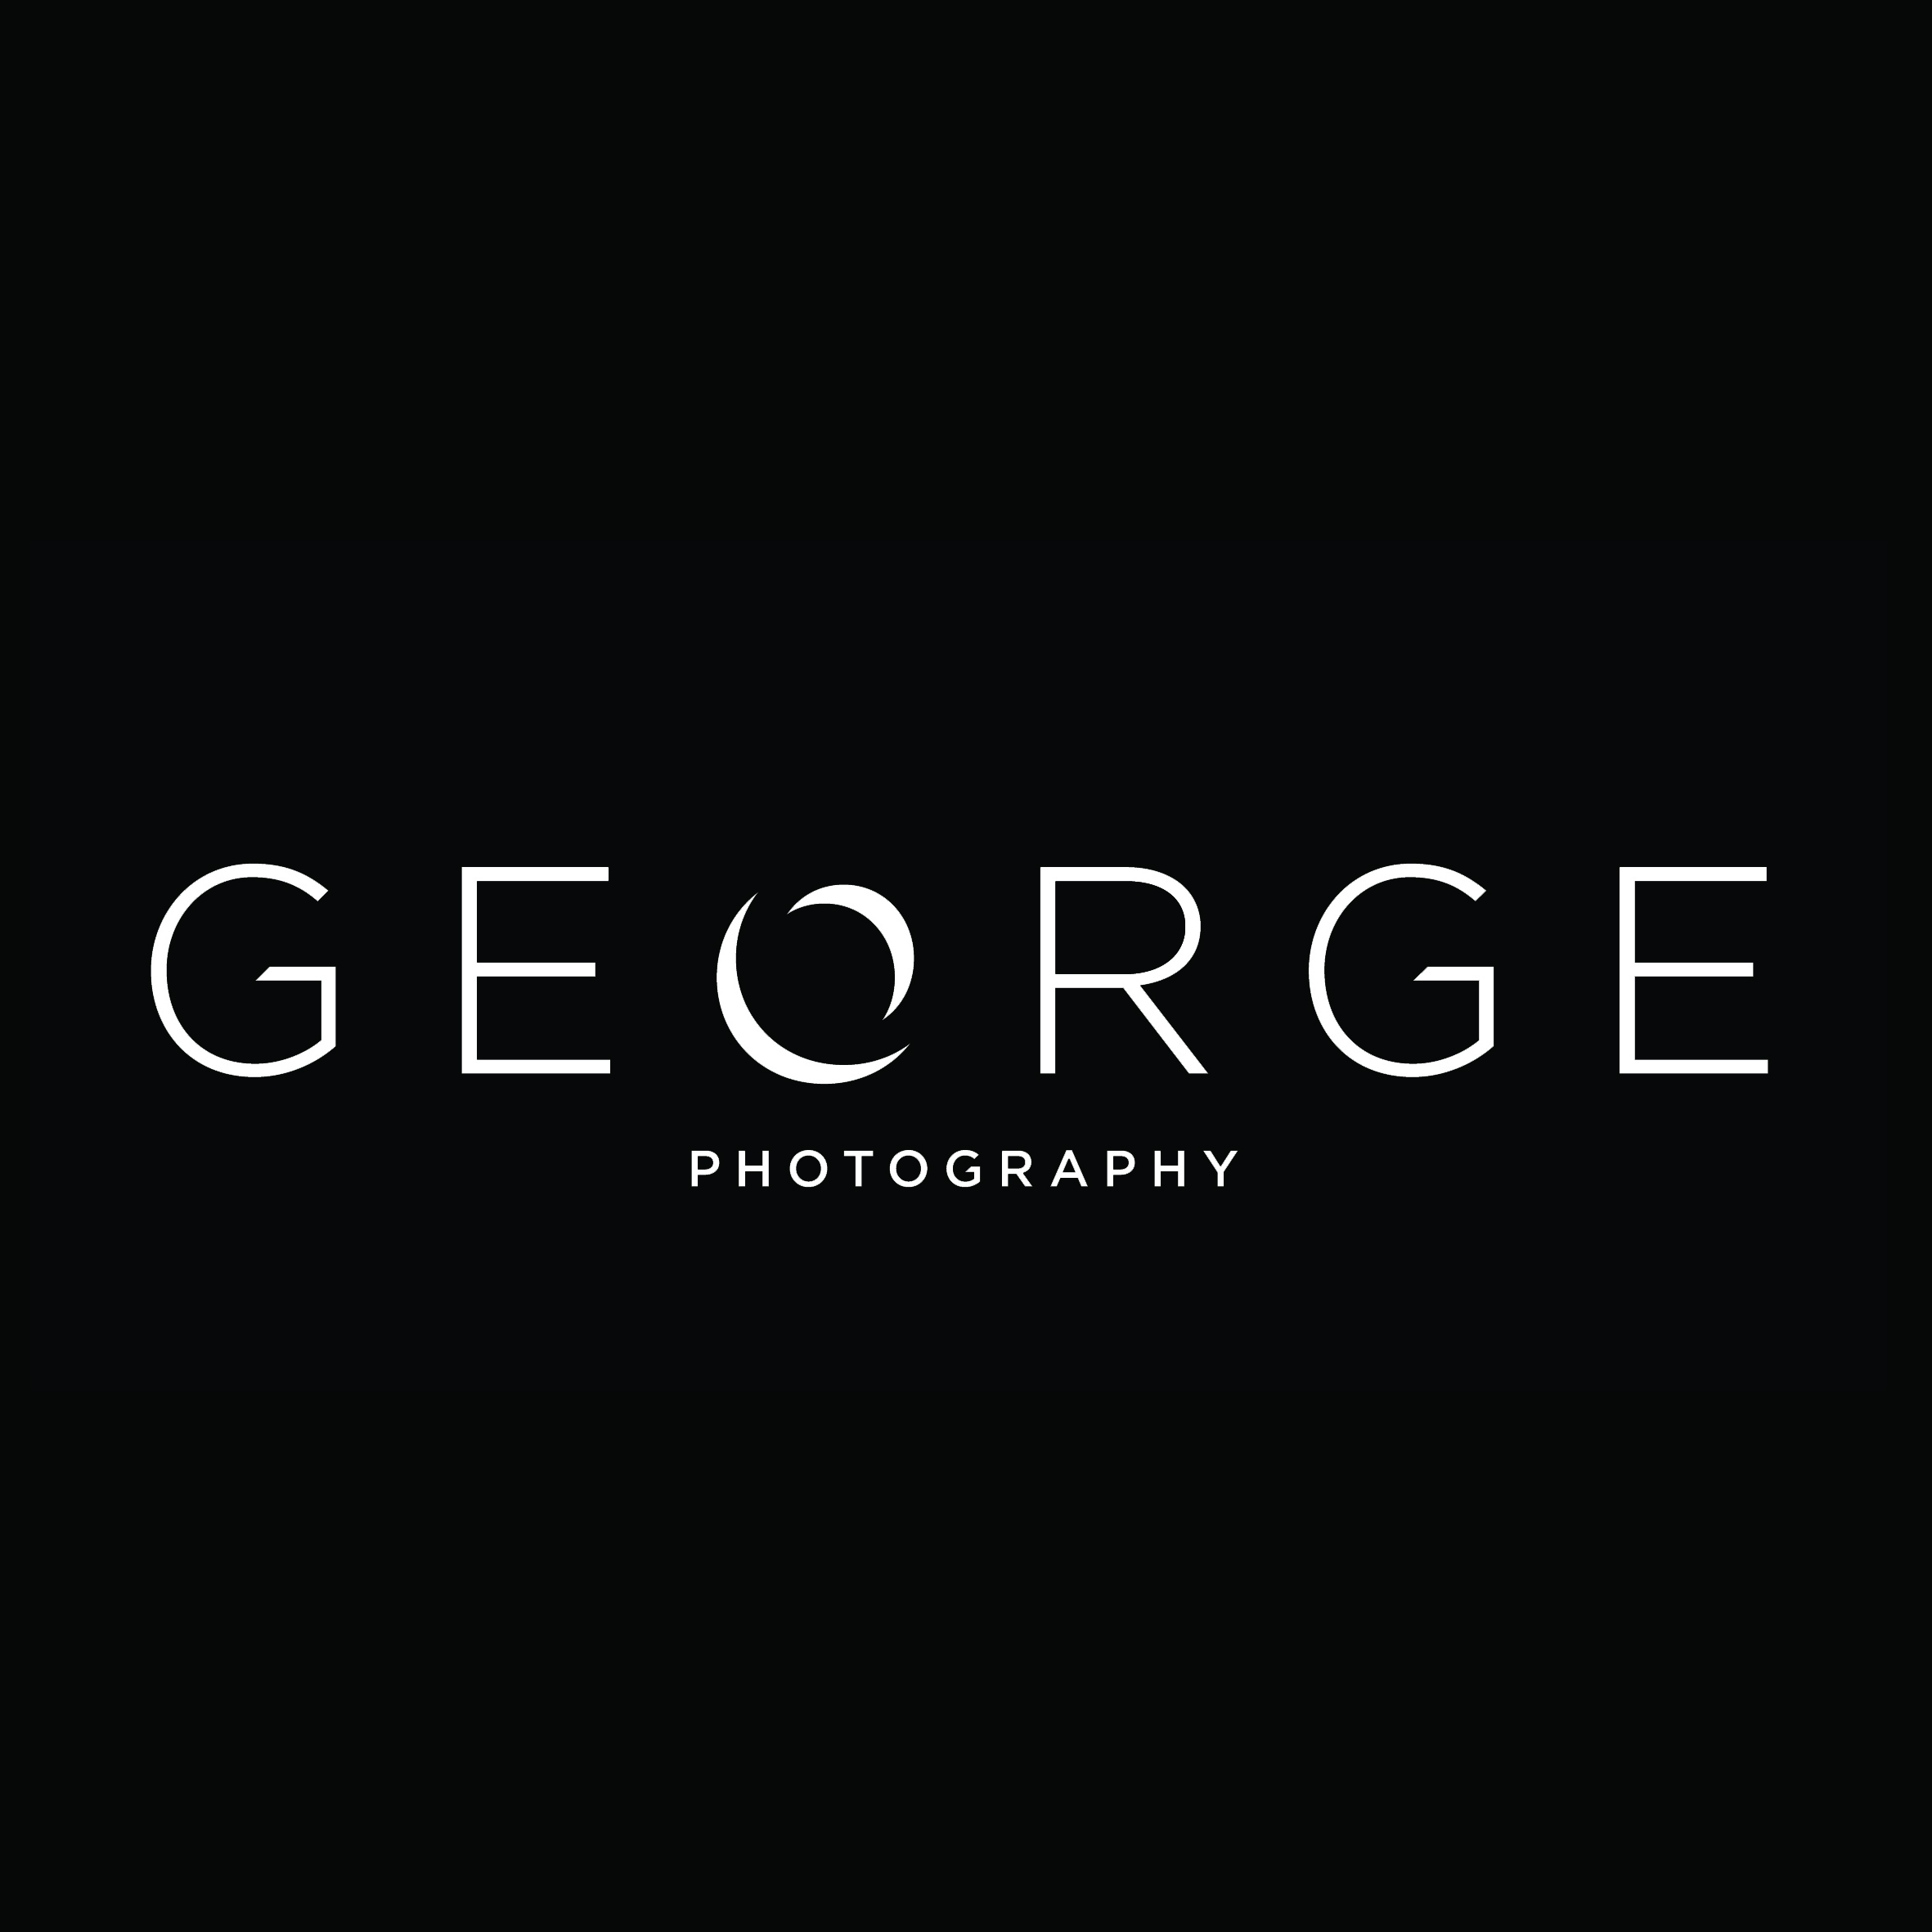 GEORGE LOGO BLACK F.jpg